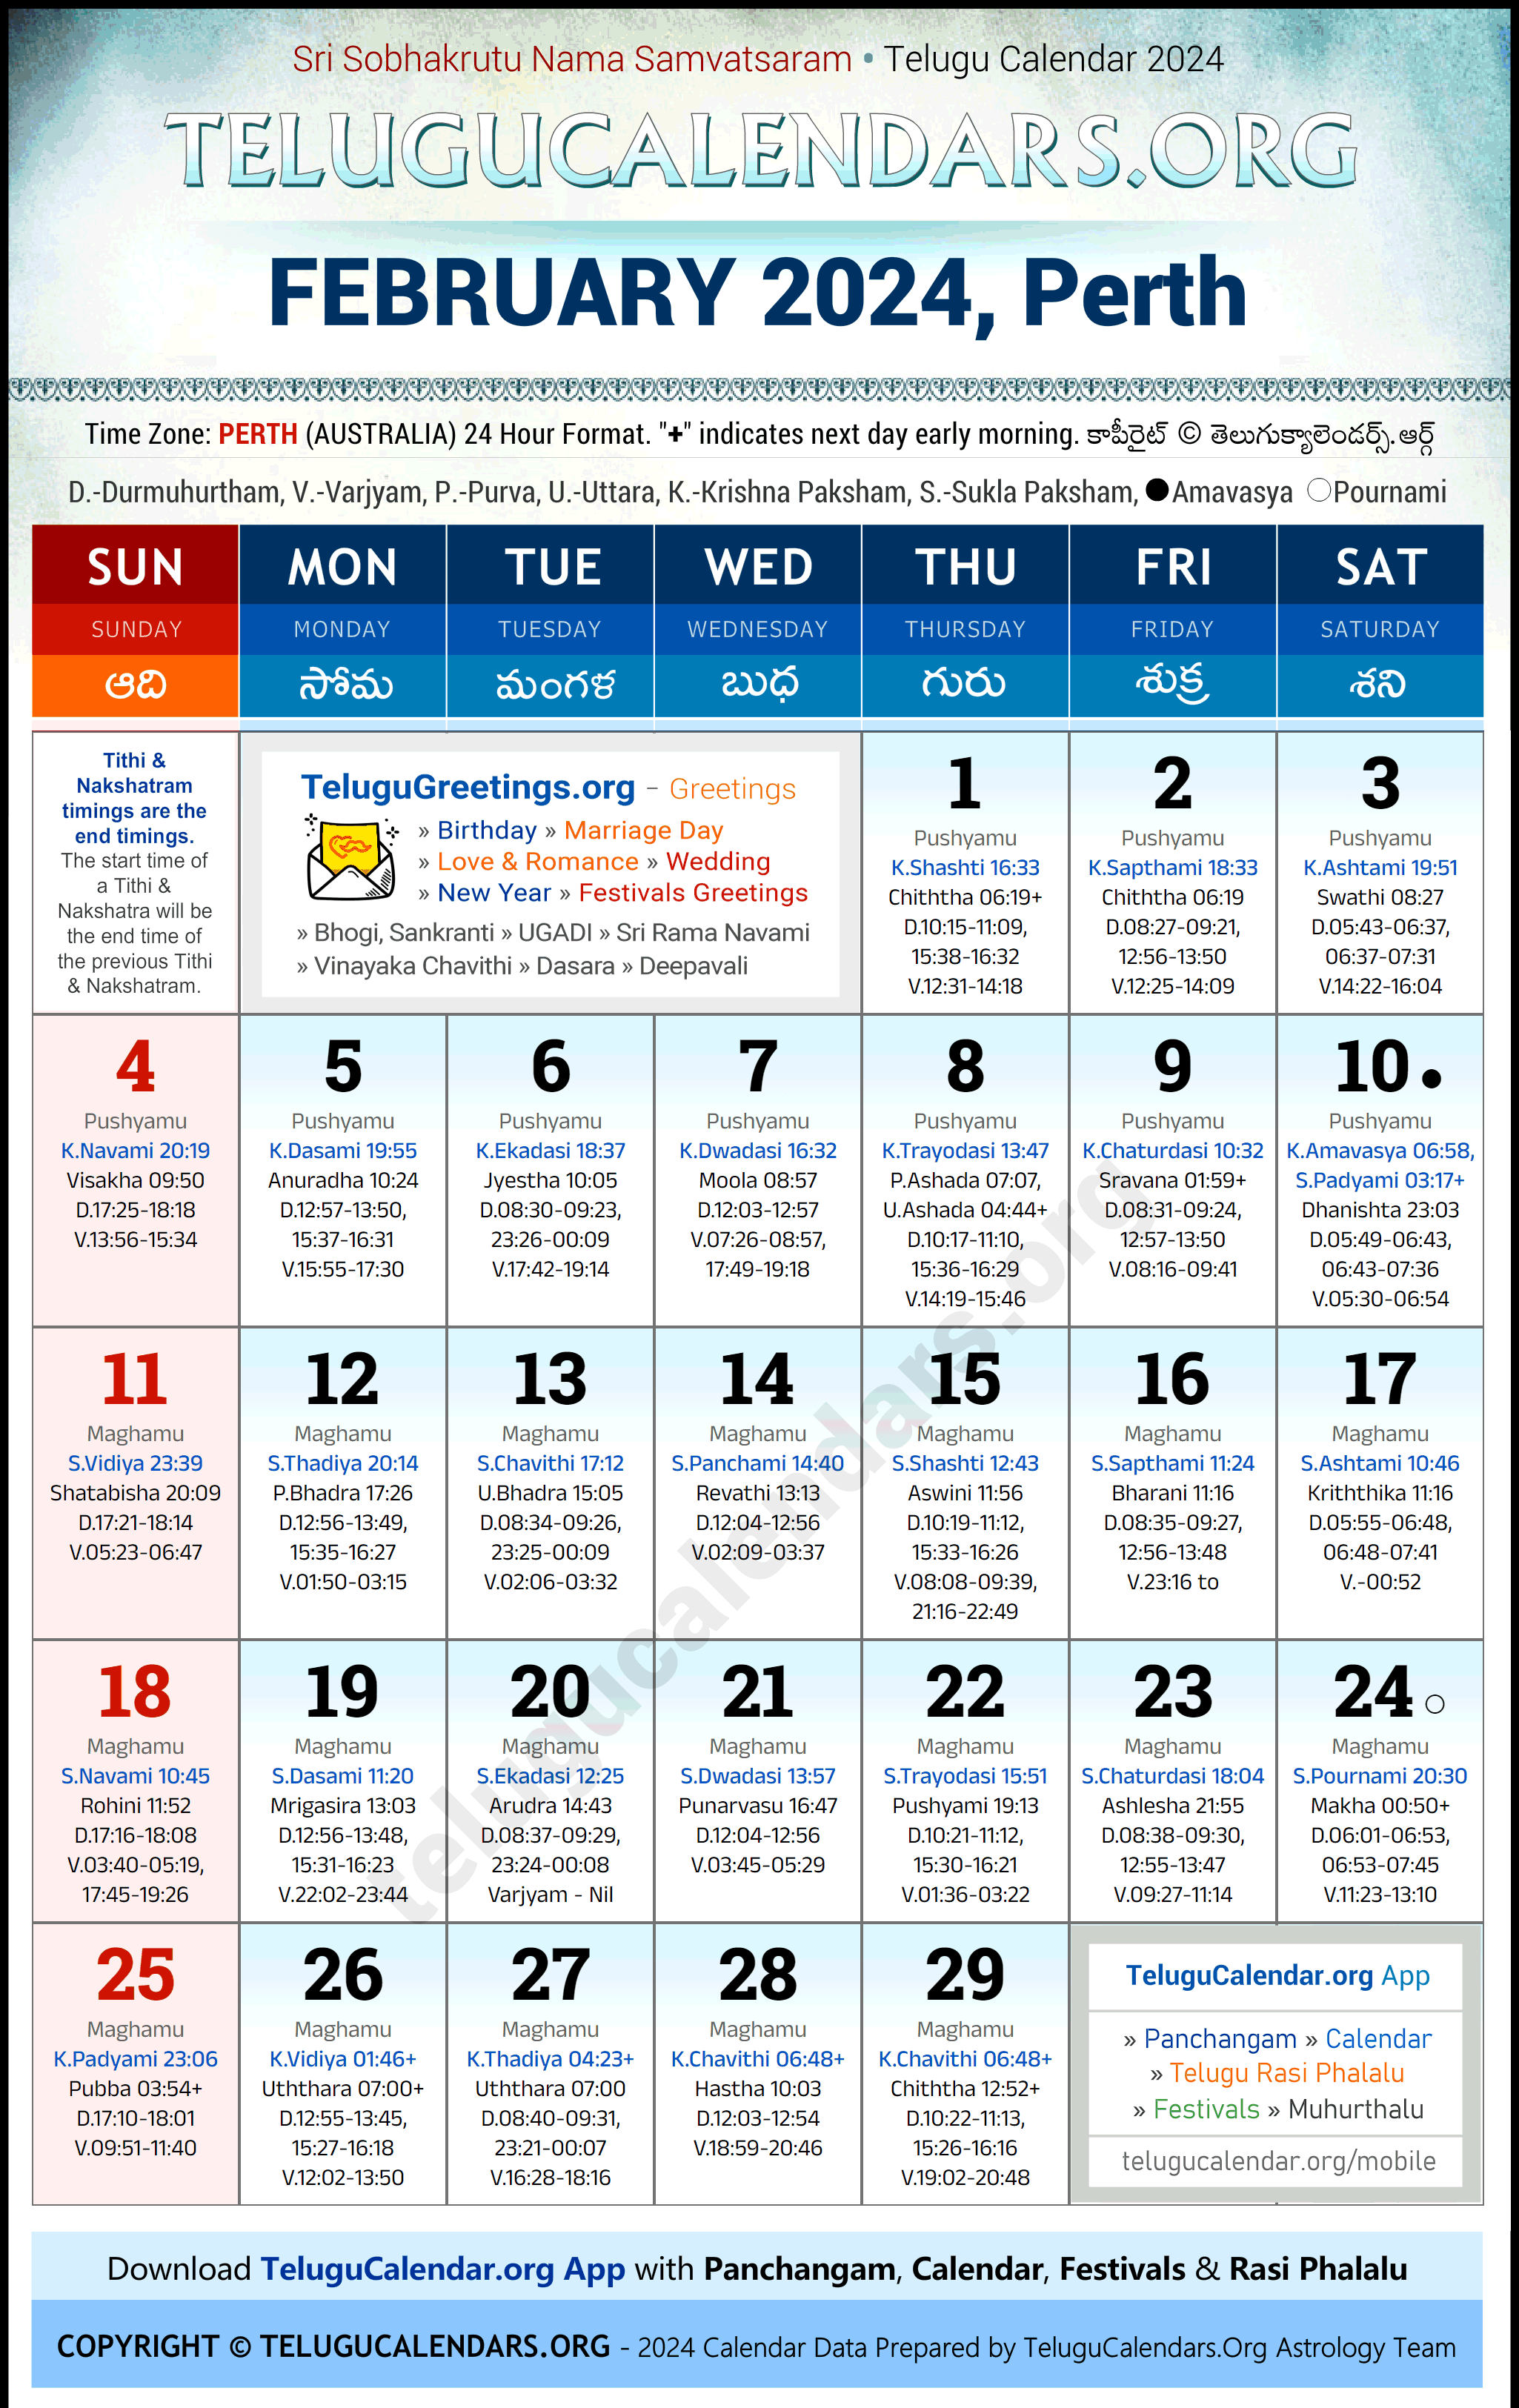 Telugu Calendar 2024 February Festivals for Perth